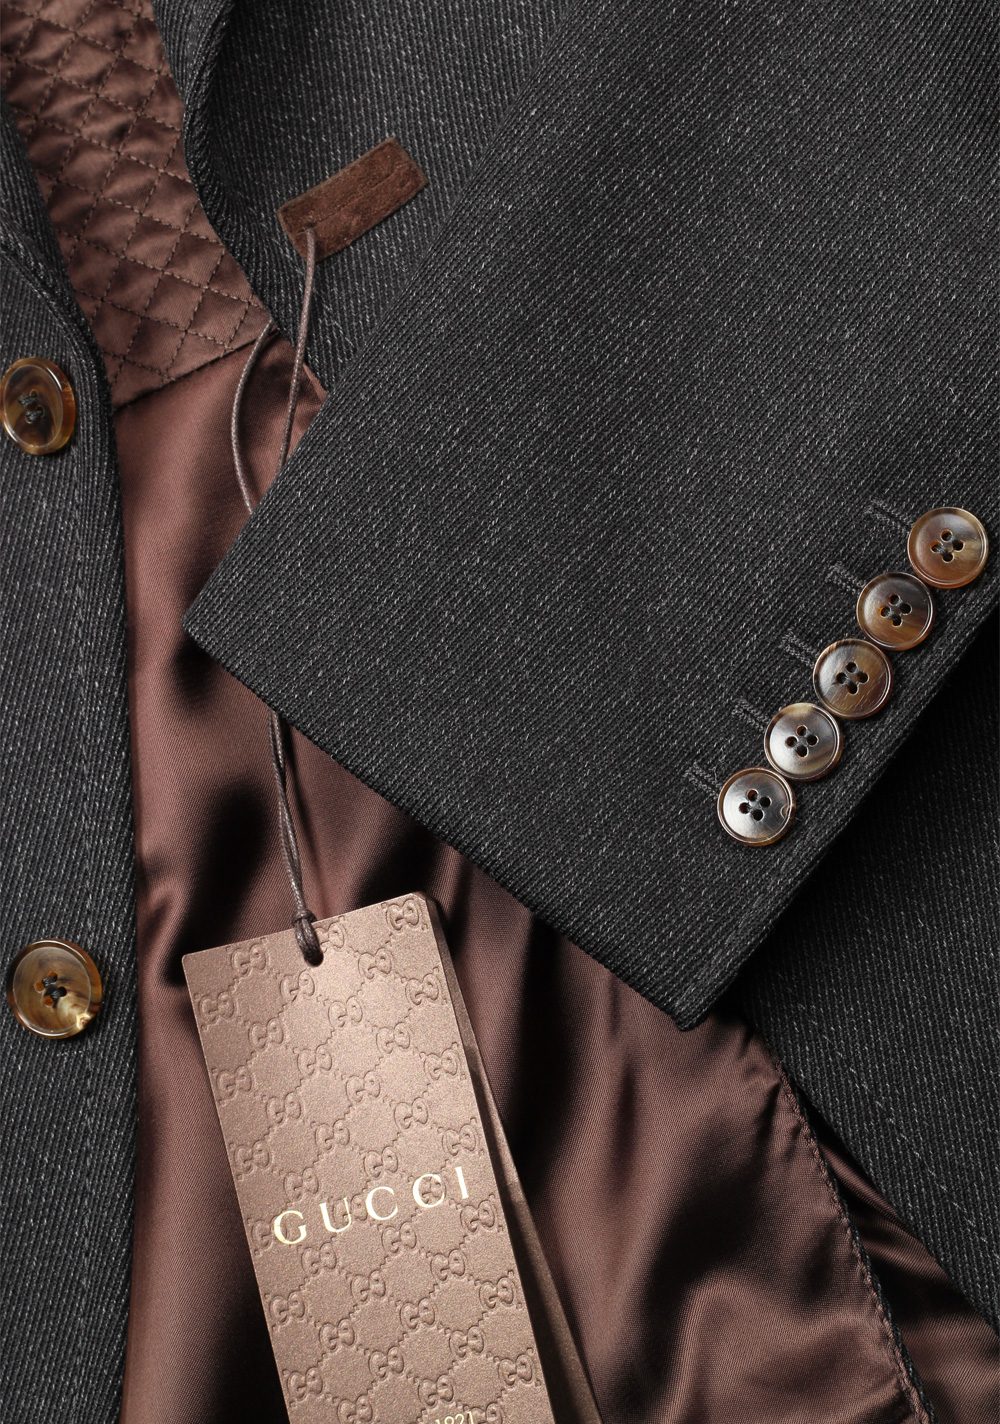 Gucci Gray Coat Size 50 / 40R U.S. In Wool | Costume Limité